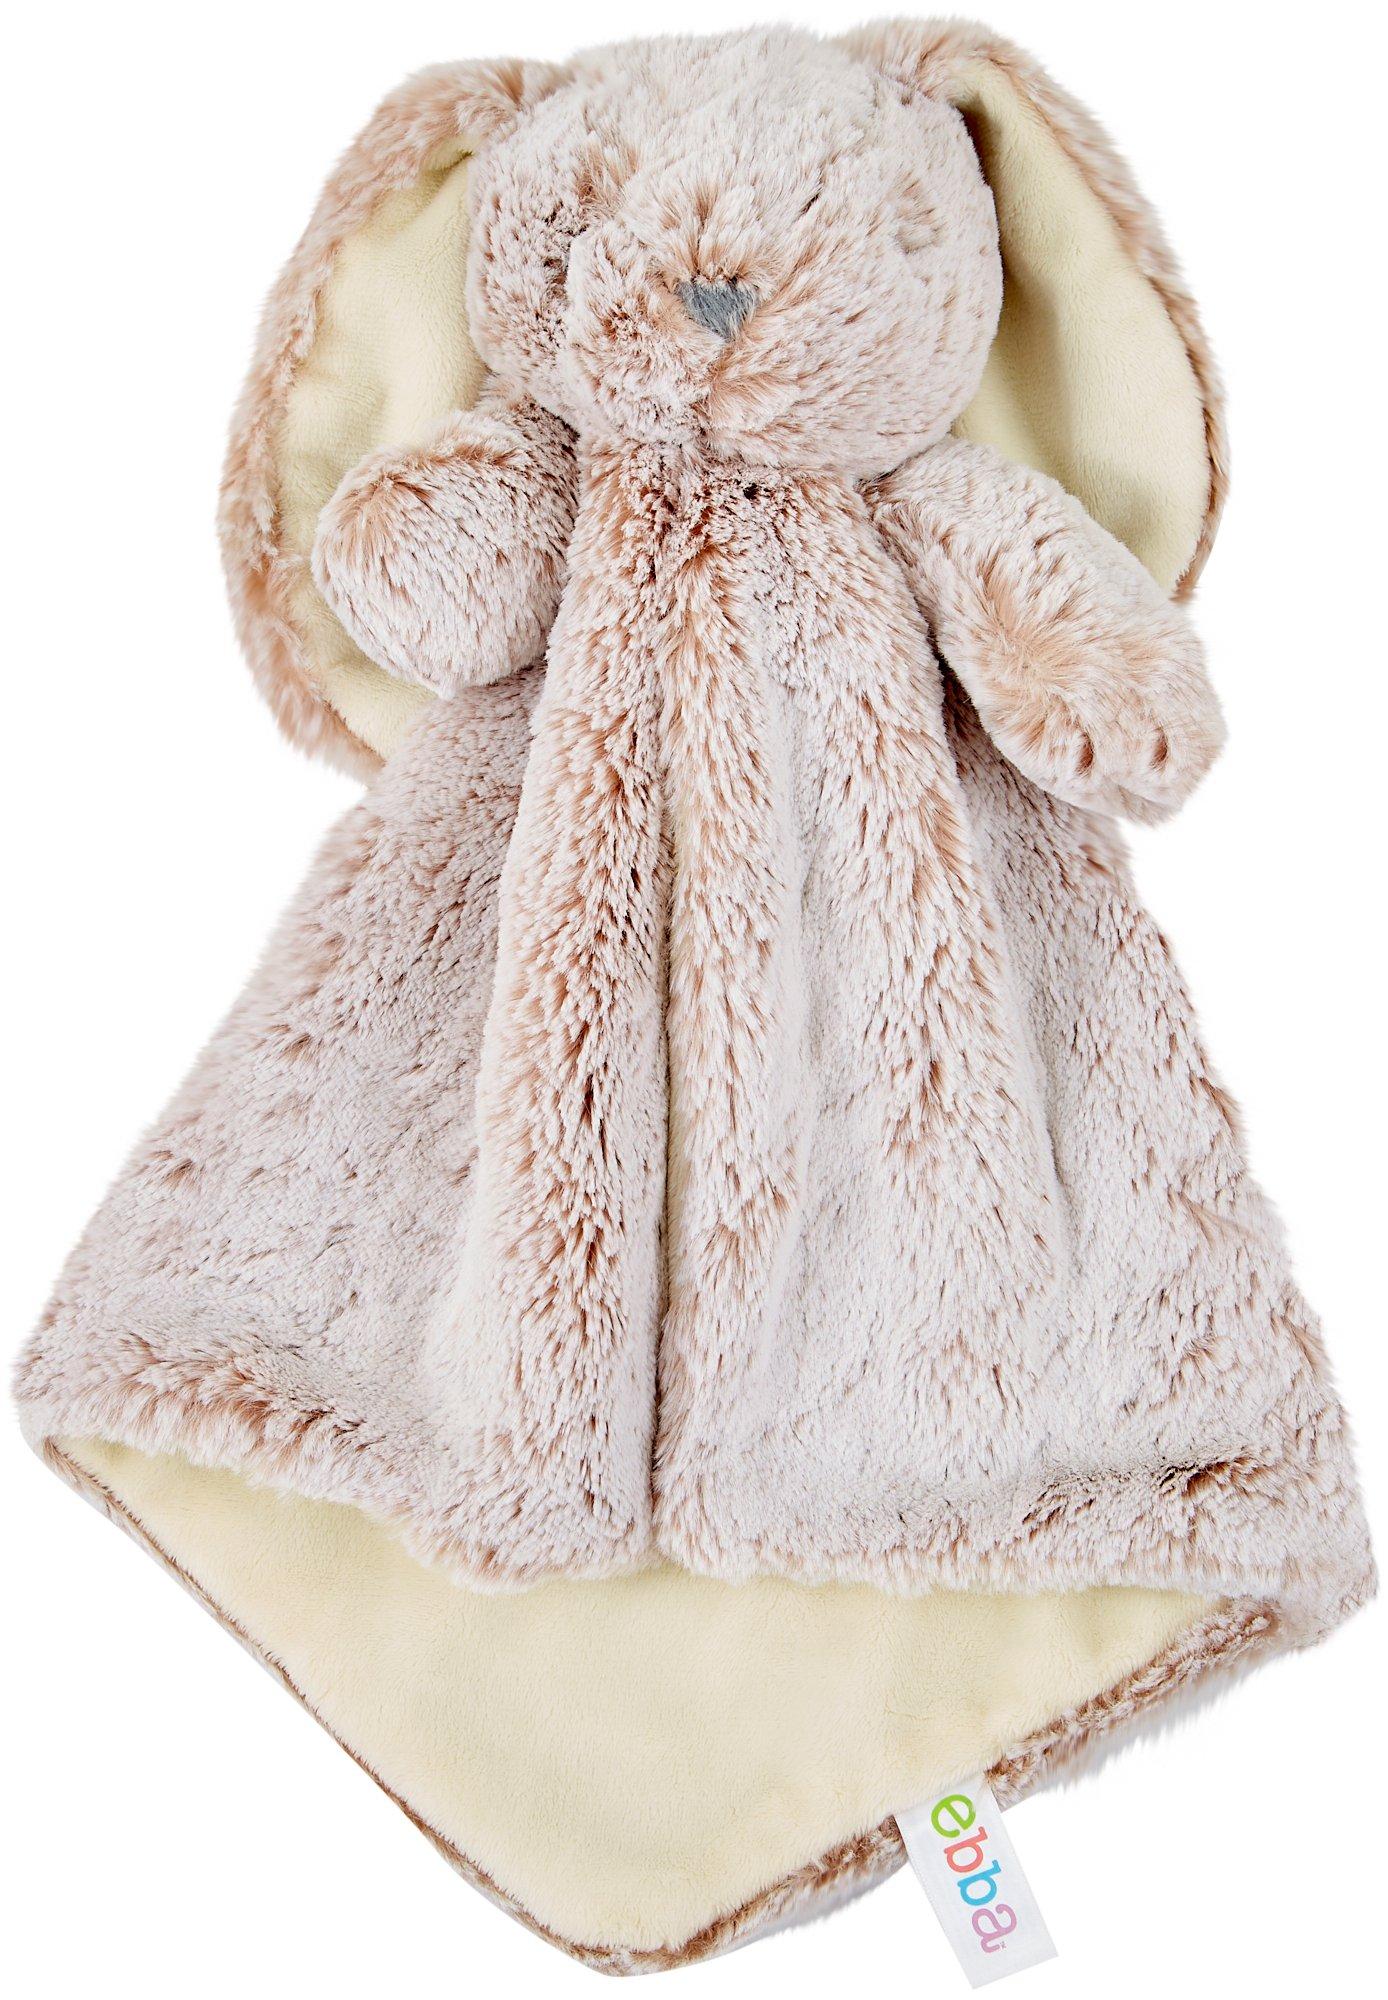 Ebba Bree Bunny Plush Toy